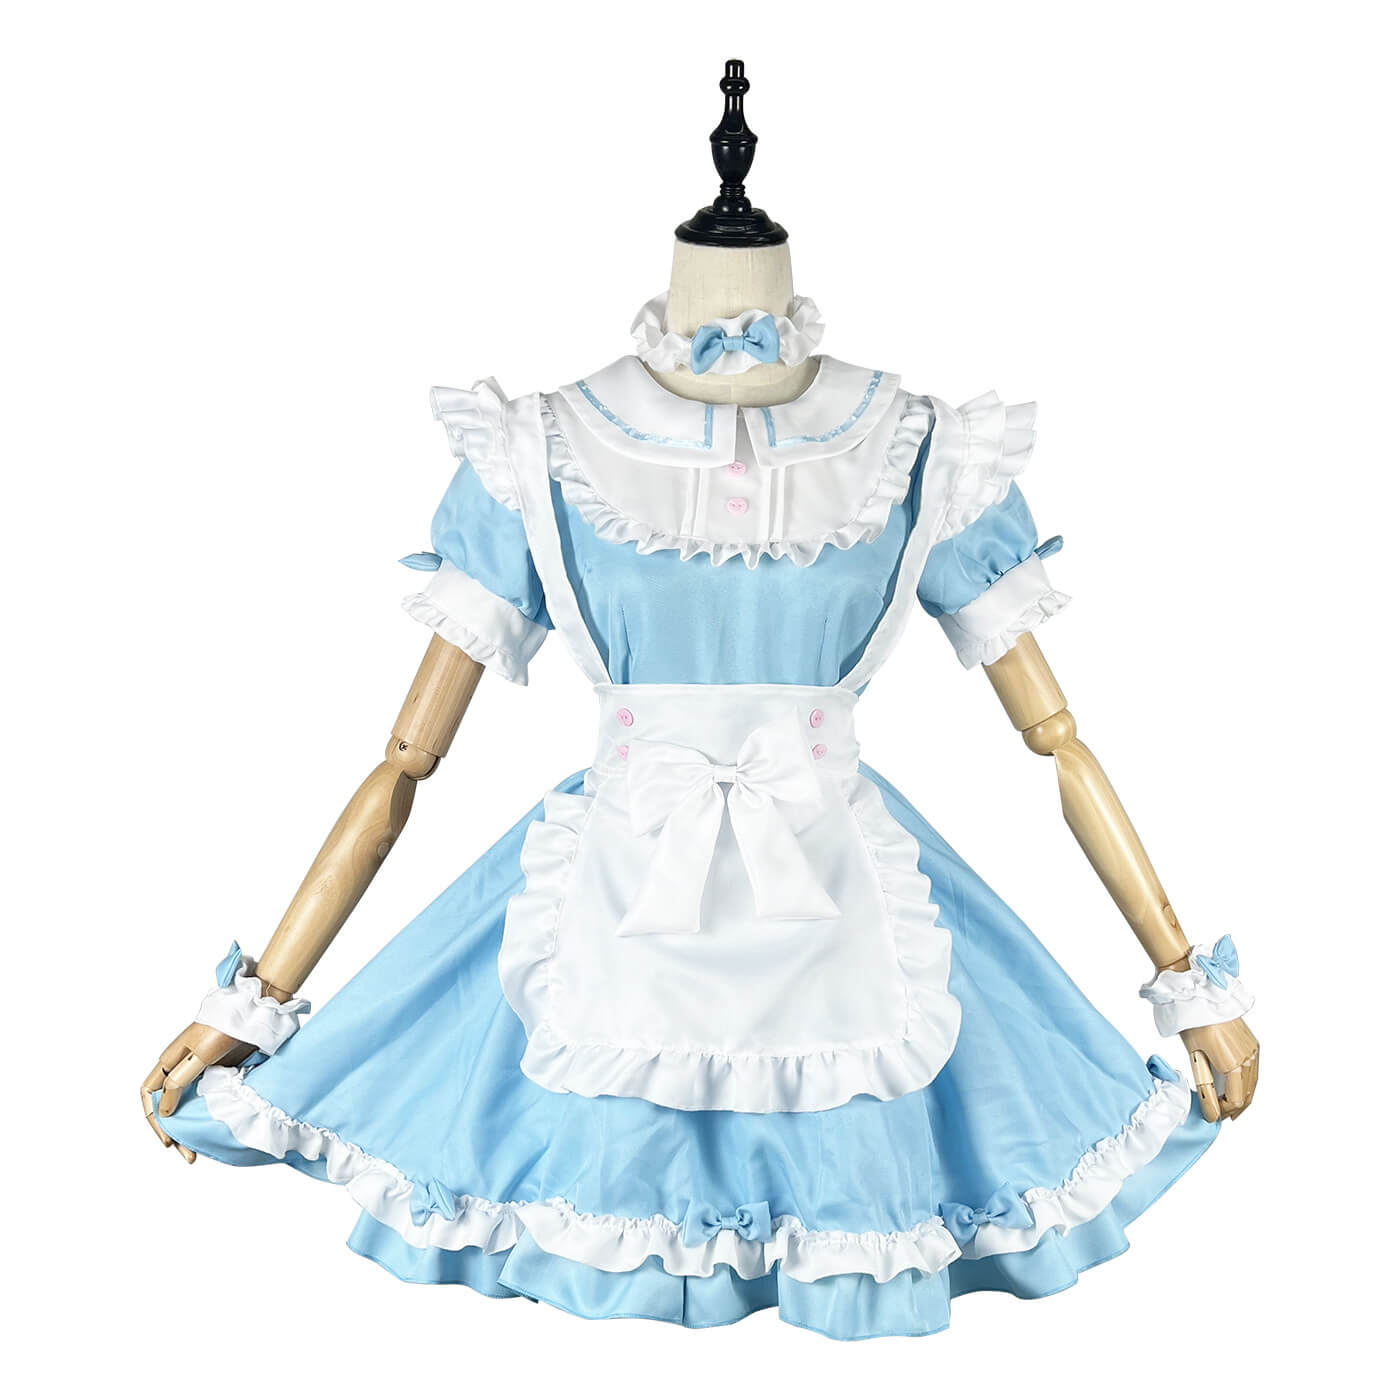 cutiekill-alice-cosplay-dress-ah0485